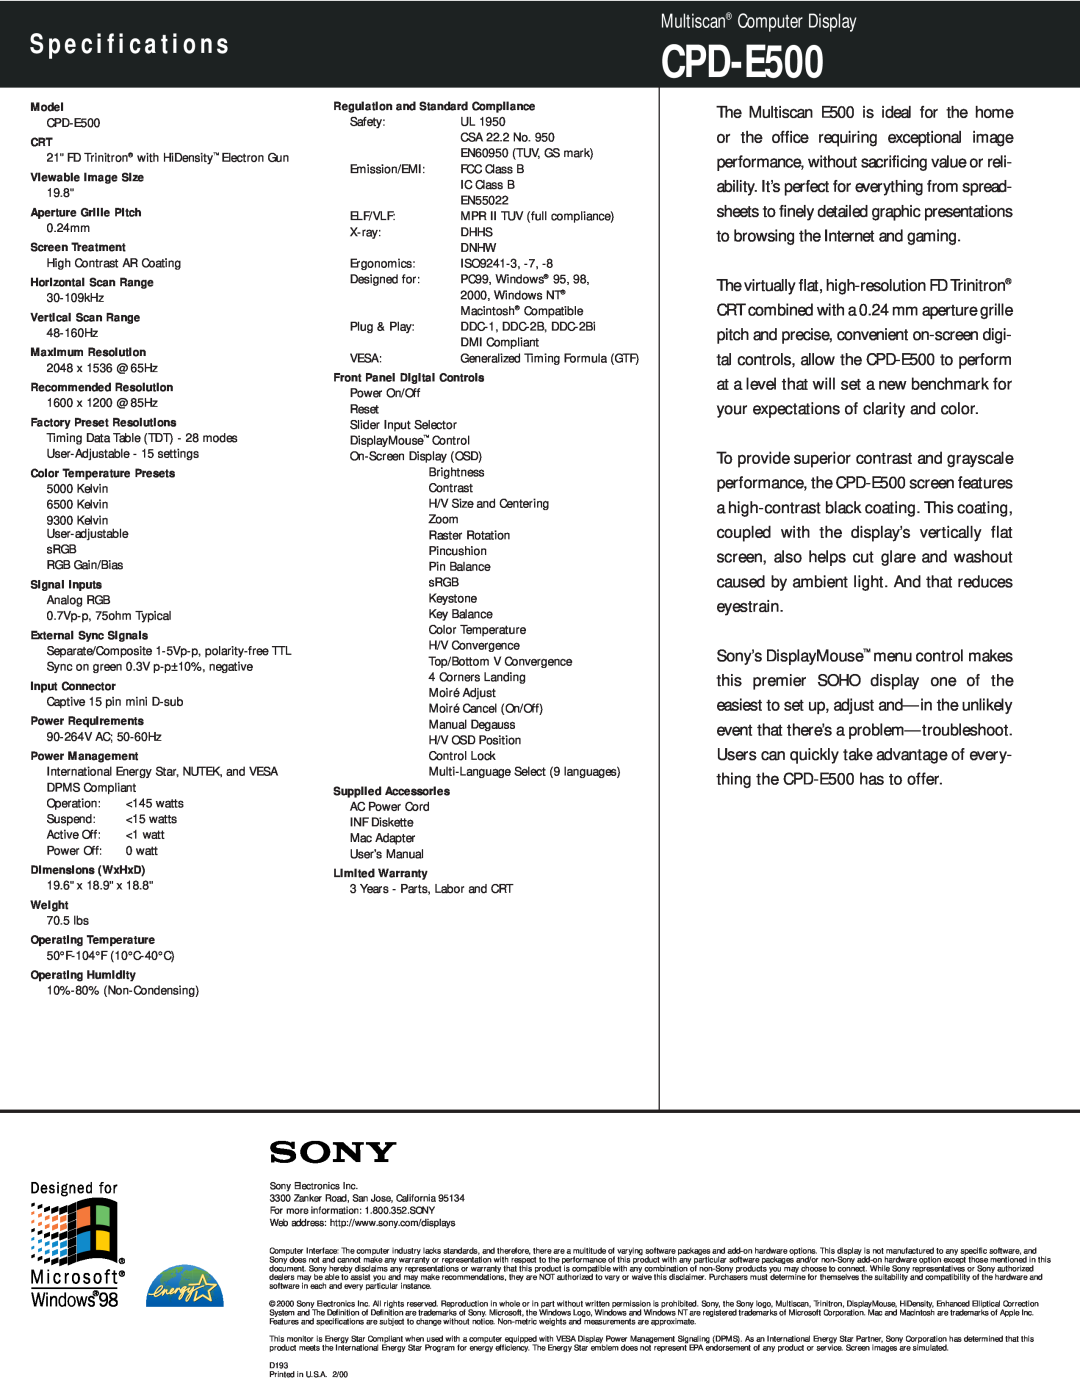 Sony CPD-E500 manual S p e c i f i c a t i o n s, Multiscan Computer Display 